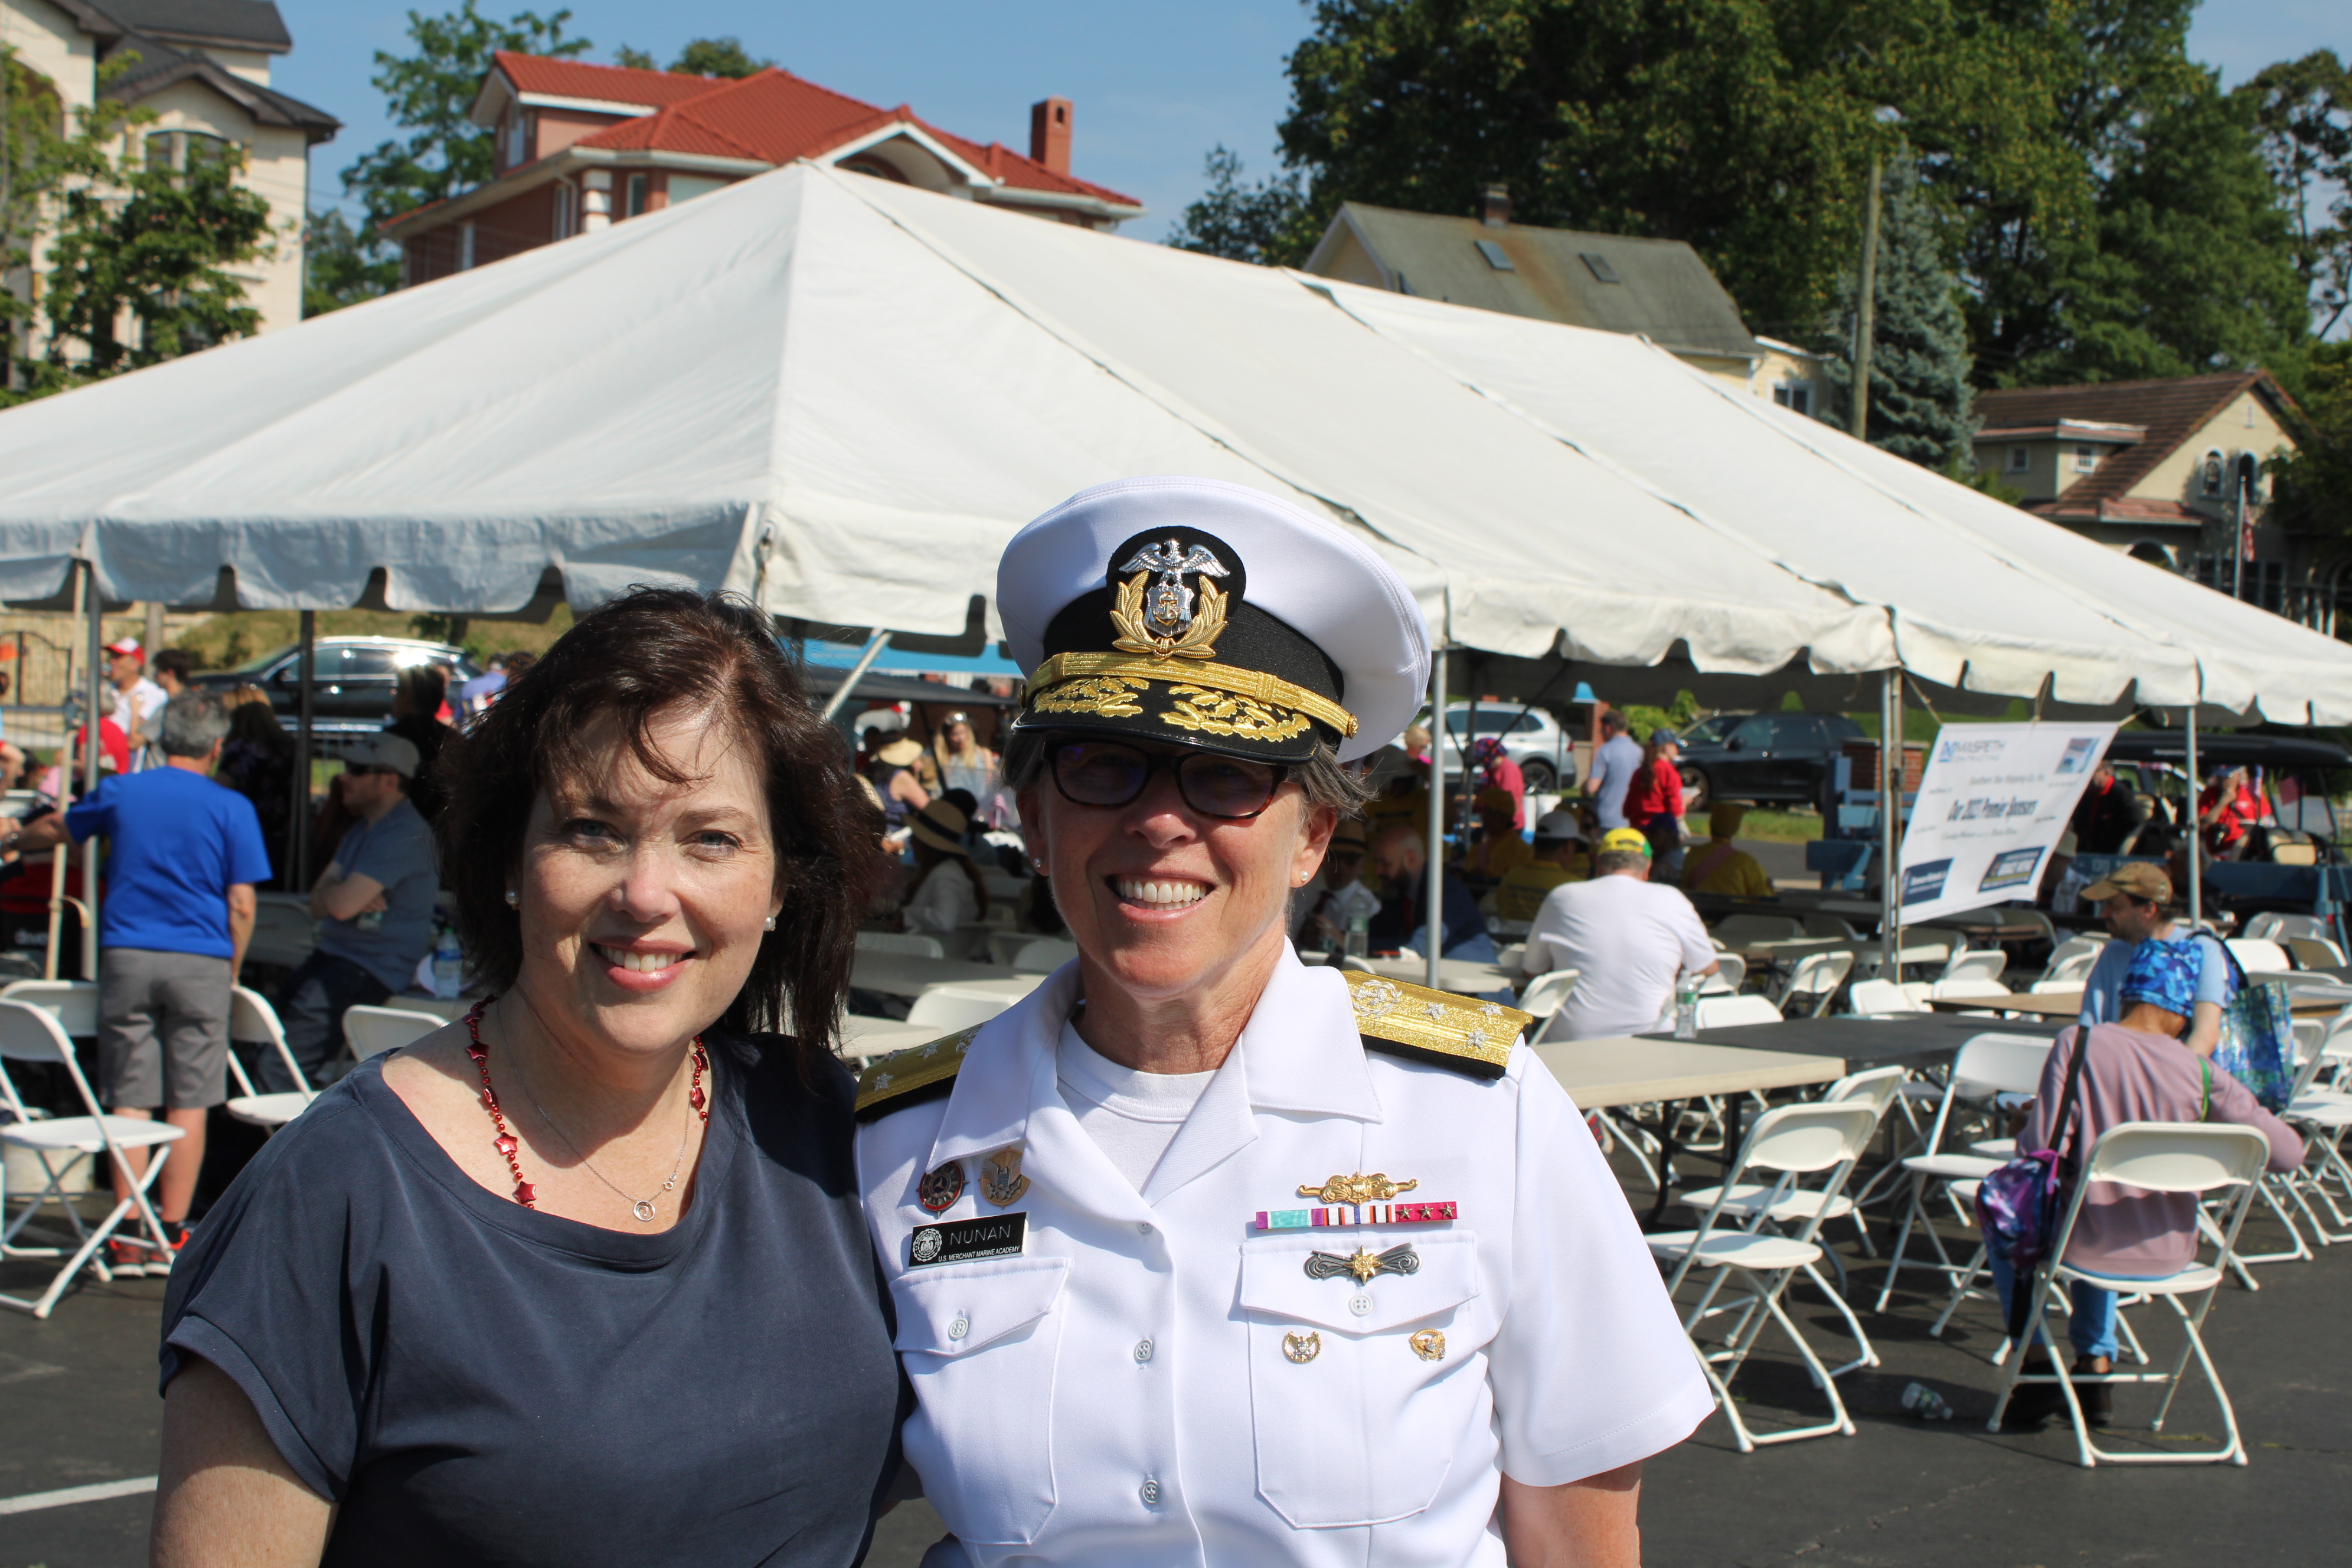 Veronica Barry thanks Admiral Nunan for a fun day at the parade